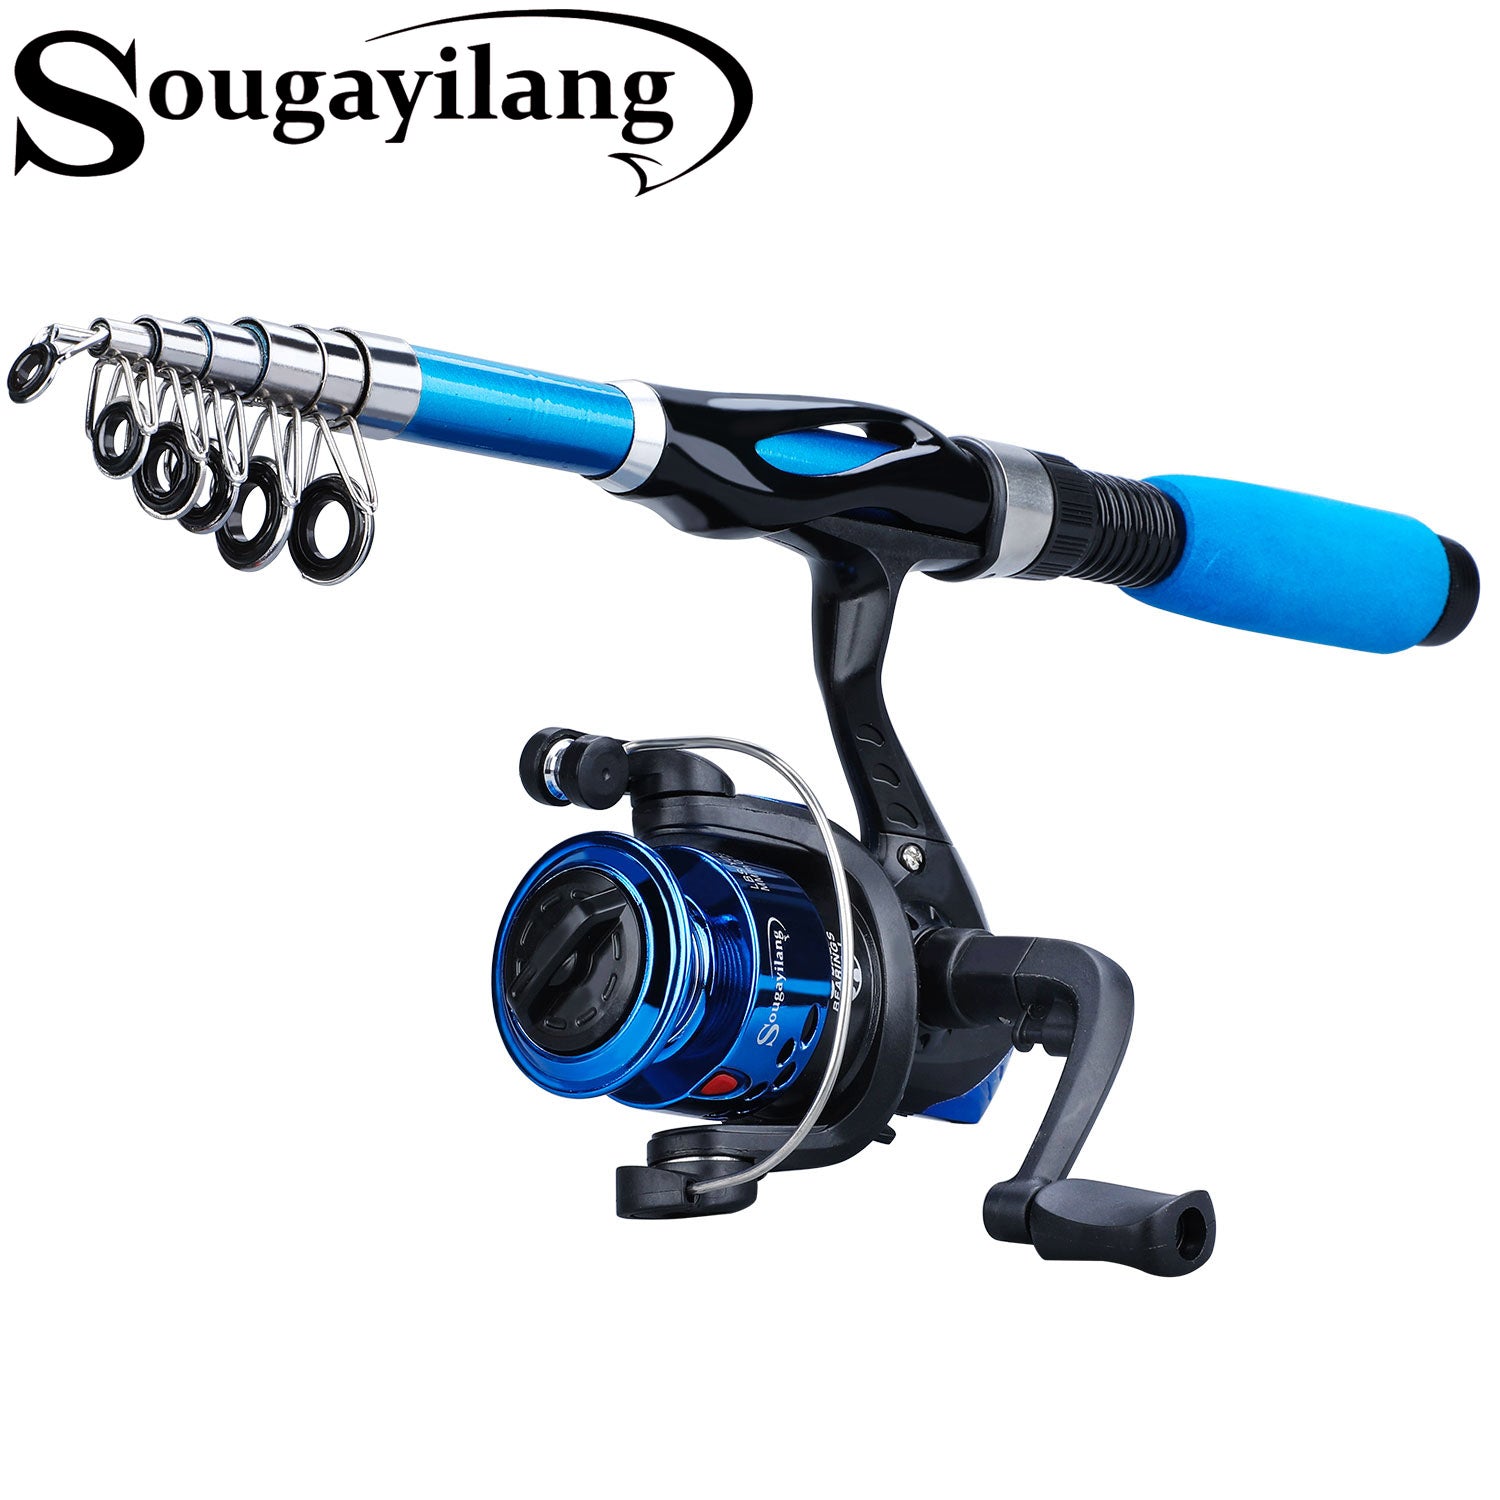 Sougayilang Portable Telescopic 1.0-1.8m Fishing Rod and Reel Combo S